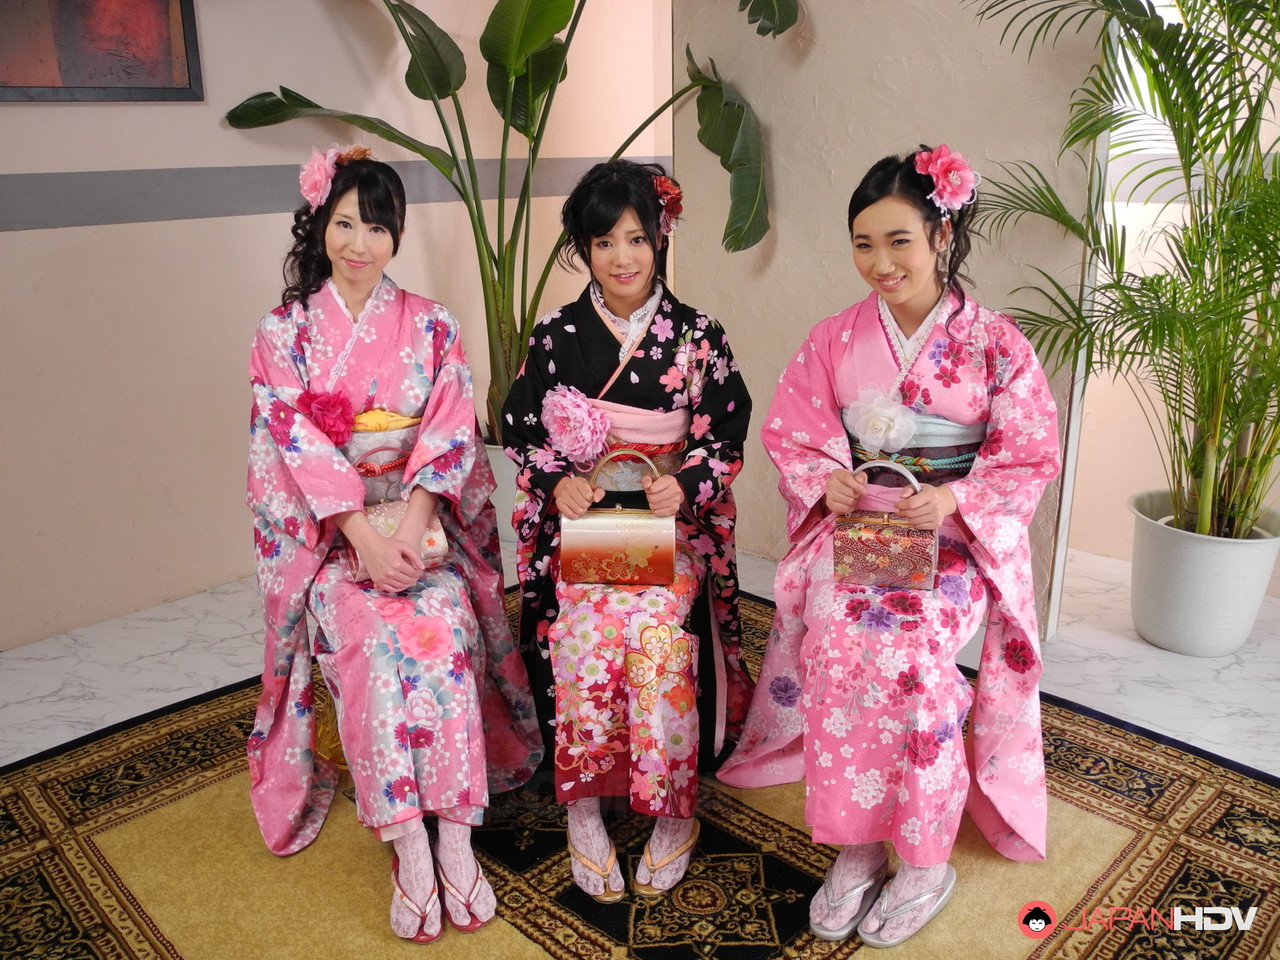 Sexy Asian girl Hina & her friends suck a dick wearing traditional Asian robes porno fotky #424210118 | Japan HDV Pics, Hina, Sanae Momoi, Uta Kohaku, CFNM, mobilní porno